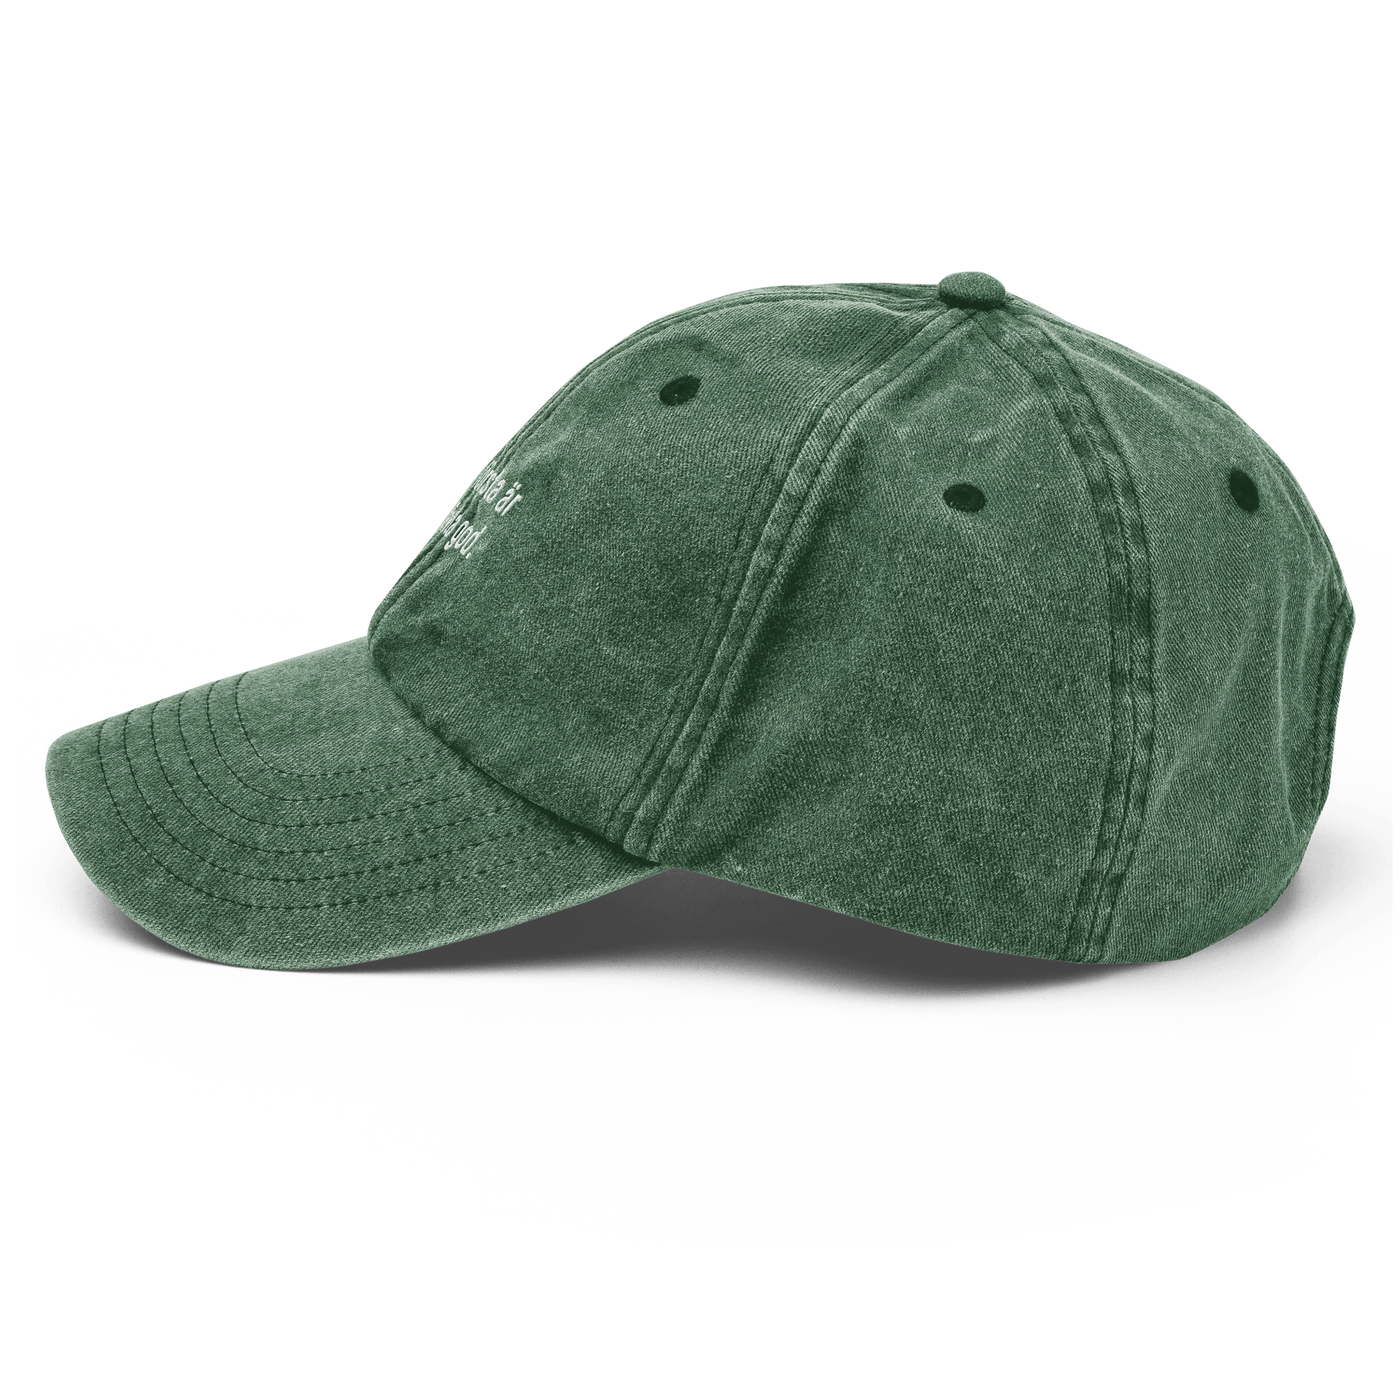 Den första Vintage Hat - Vintage Bottle Green - - Just Another Cap Store